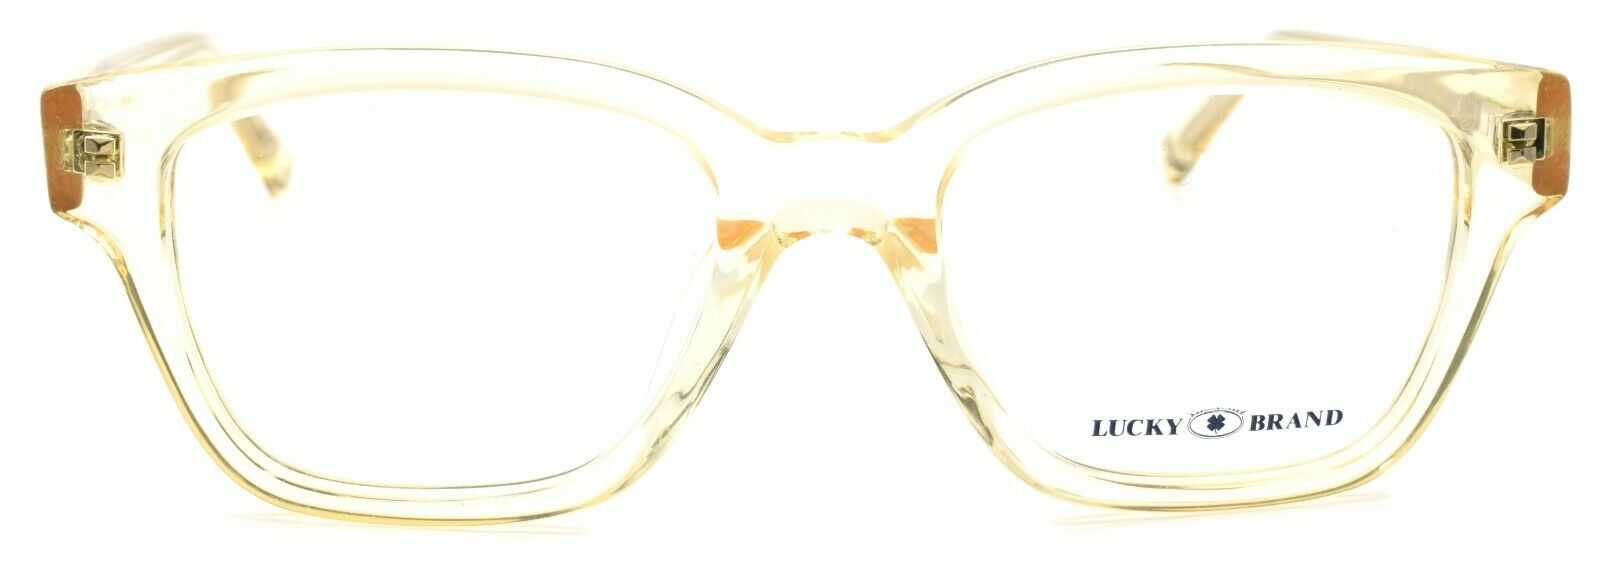 2-LUCKY BRAND Venturer UF Men's Eyeglasses Frames 50-19-145 Yellow Crystal + CASE-751286249316-IKSpecs